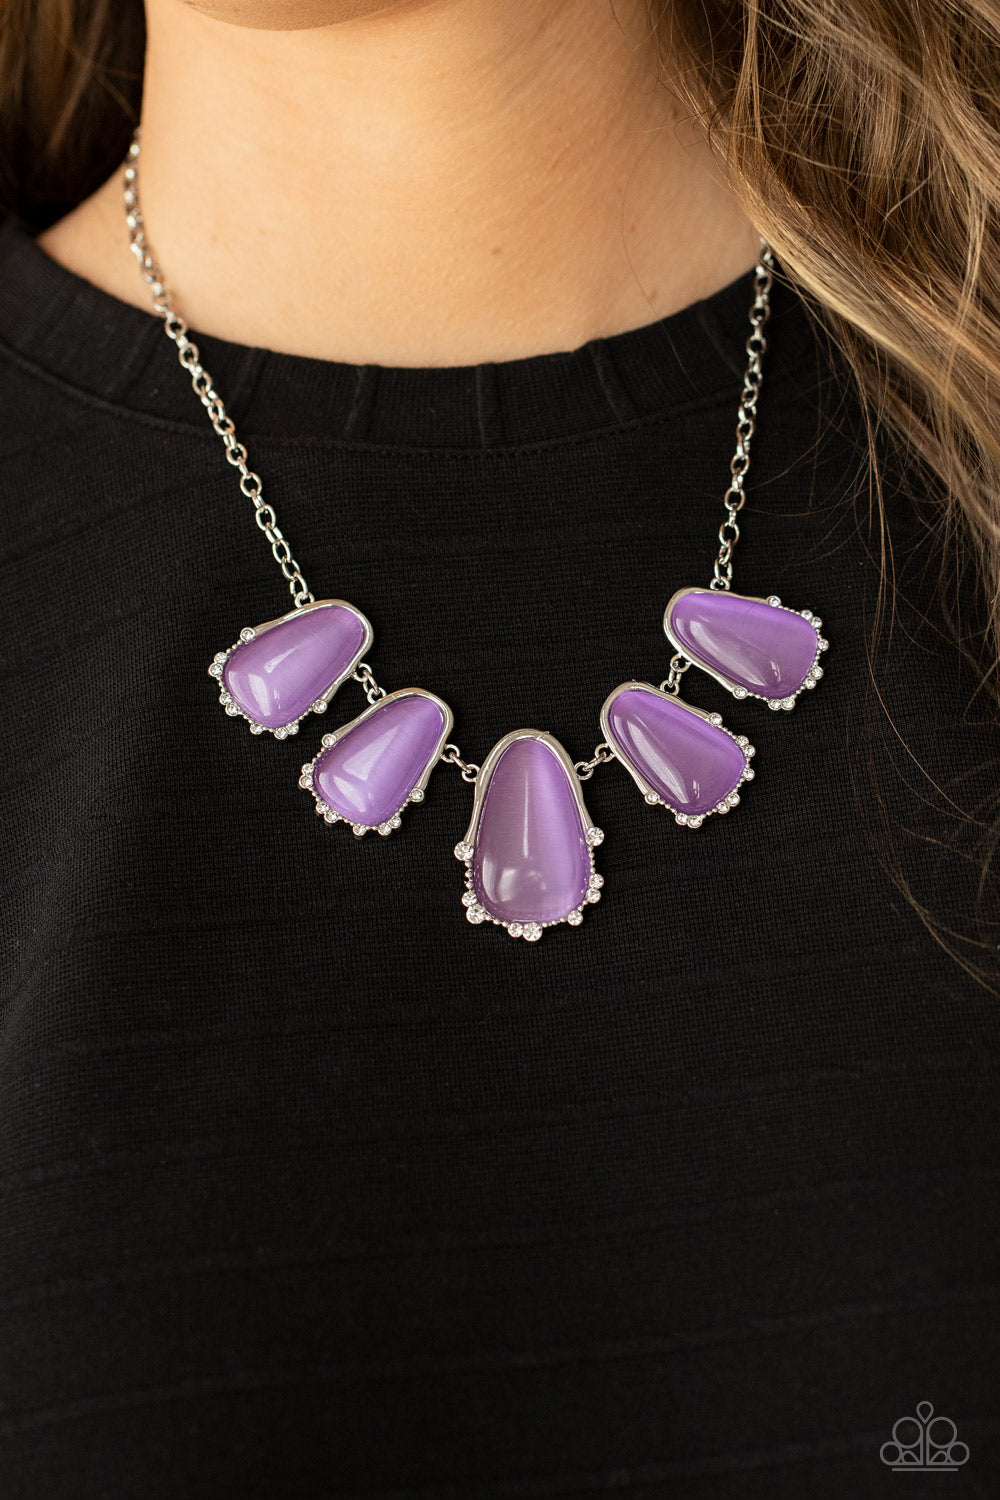 Paparazzi Necklace ~ Newport Princess - Purple Cat's Eye Stone Necklace